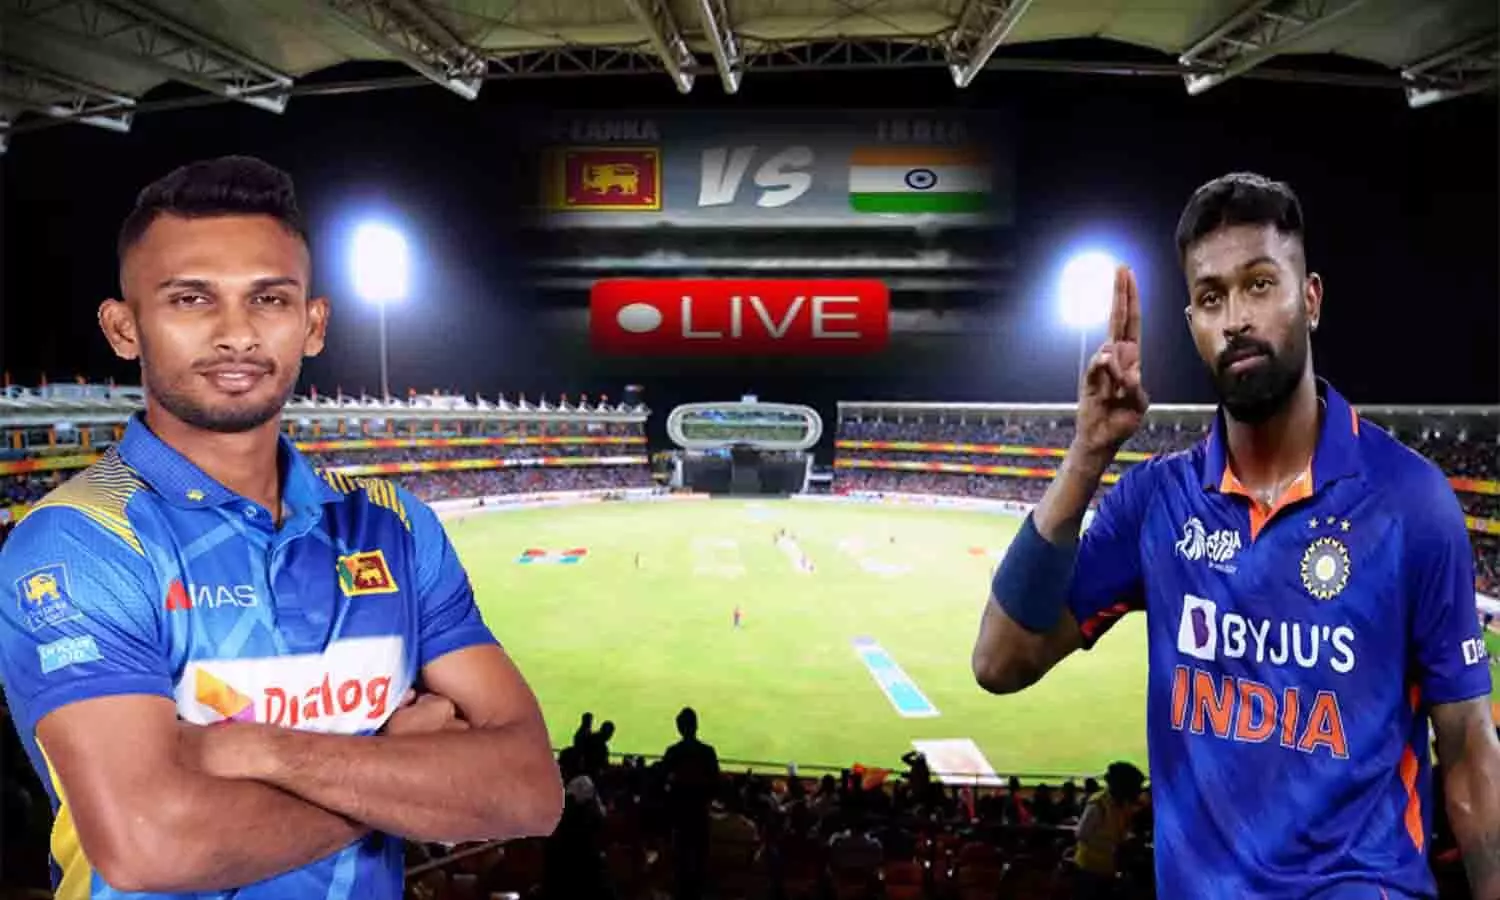 IND vs SL 3rd T20 Live Score